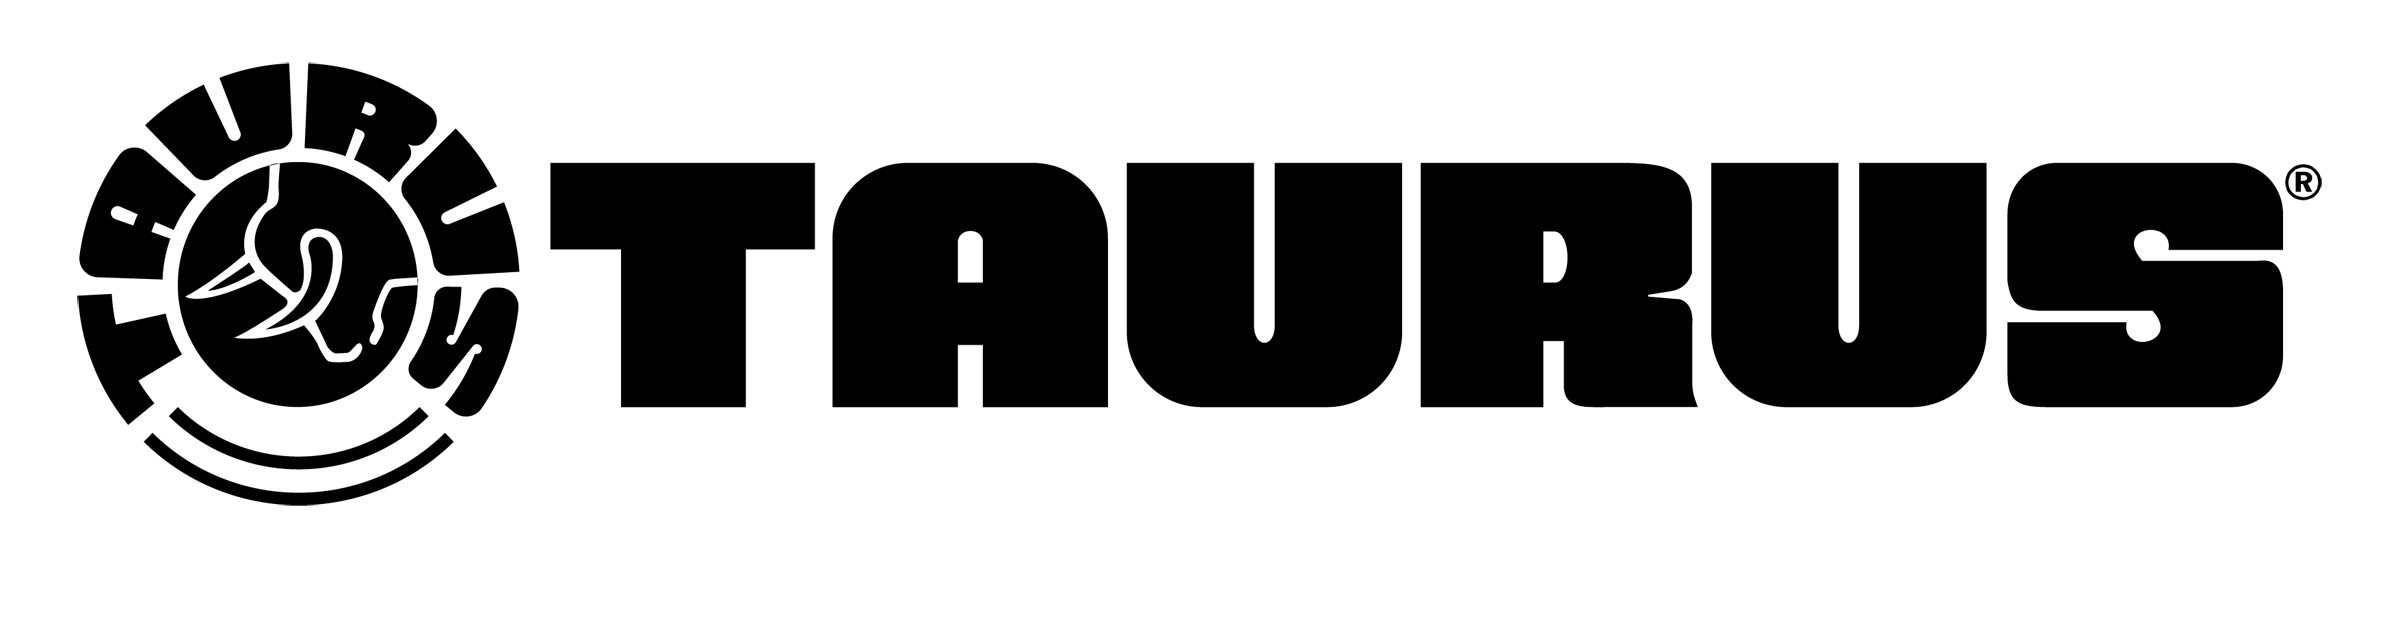 Taurus Firearms Logo - Taurus Firearms | Products I Love | Taurus logo, Guns, Taurus